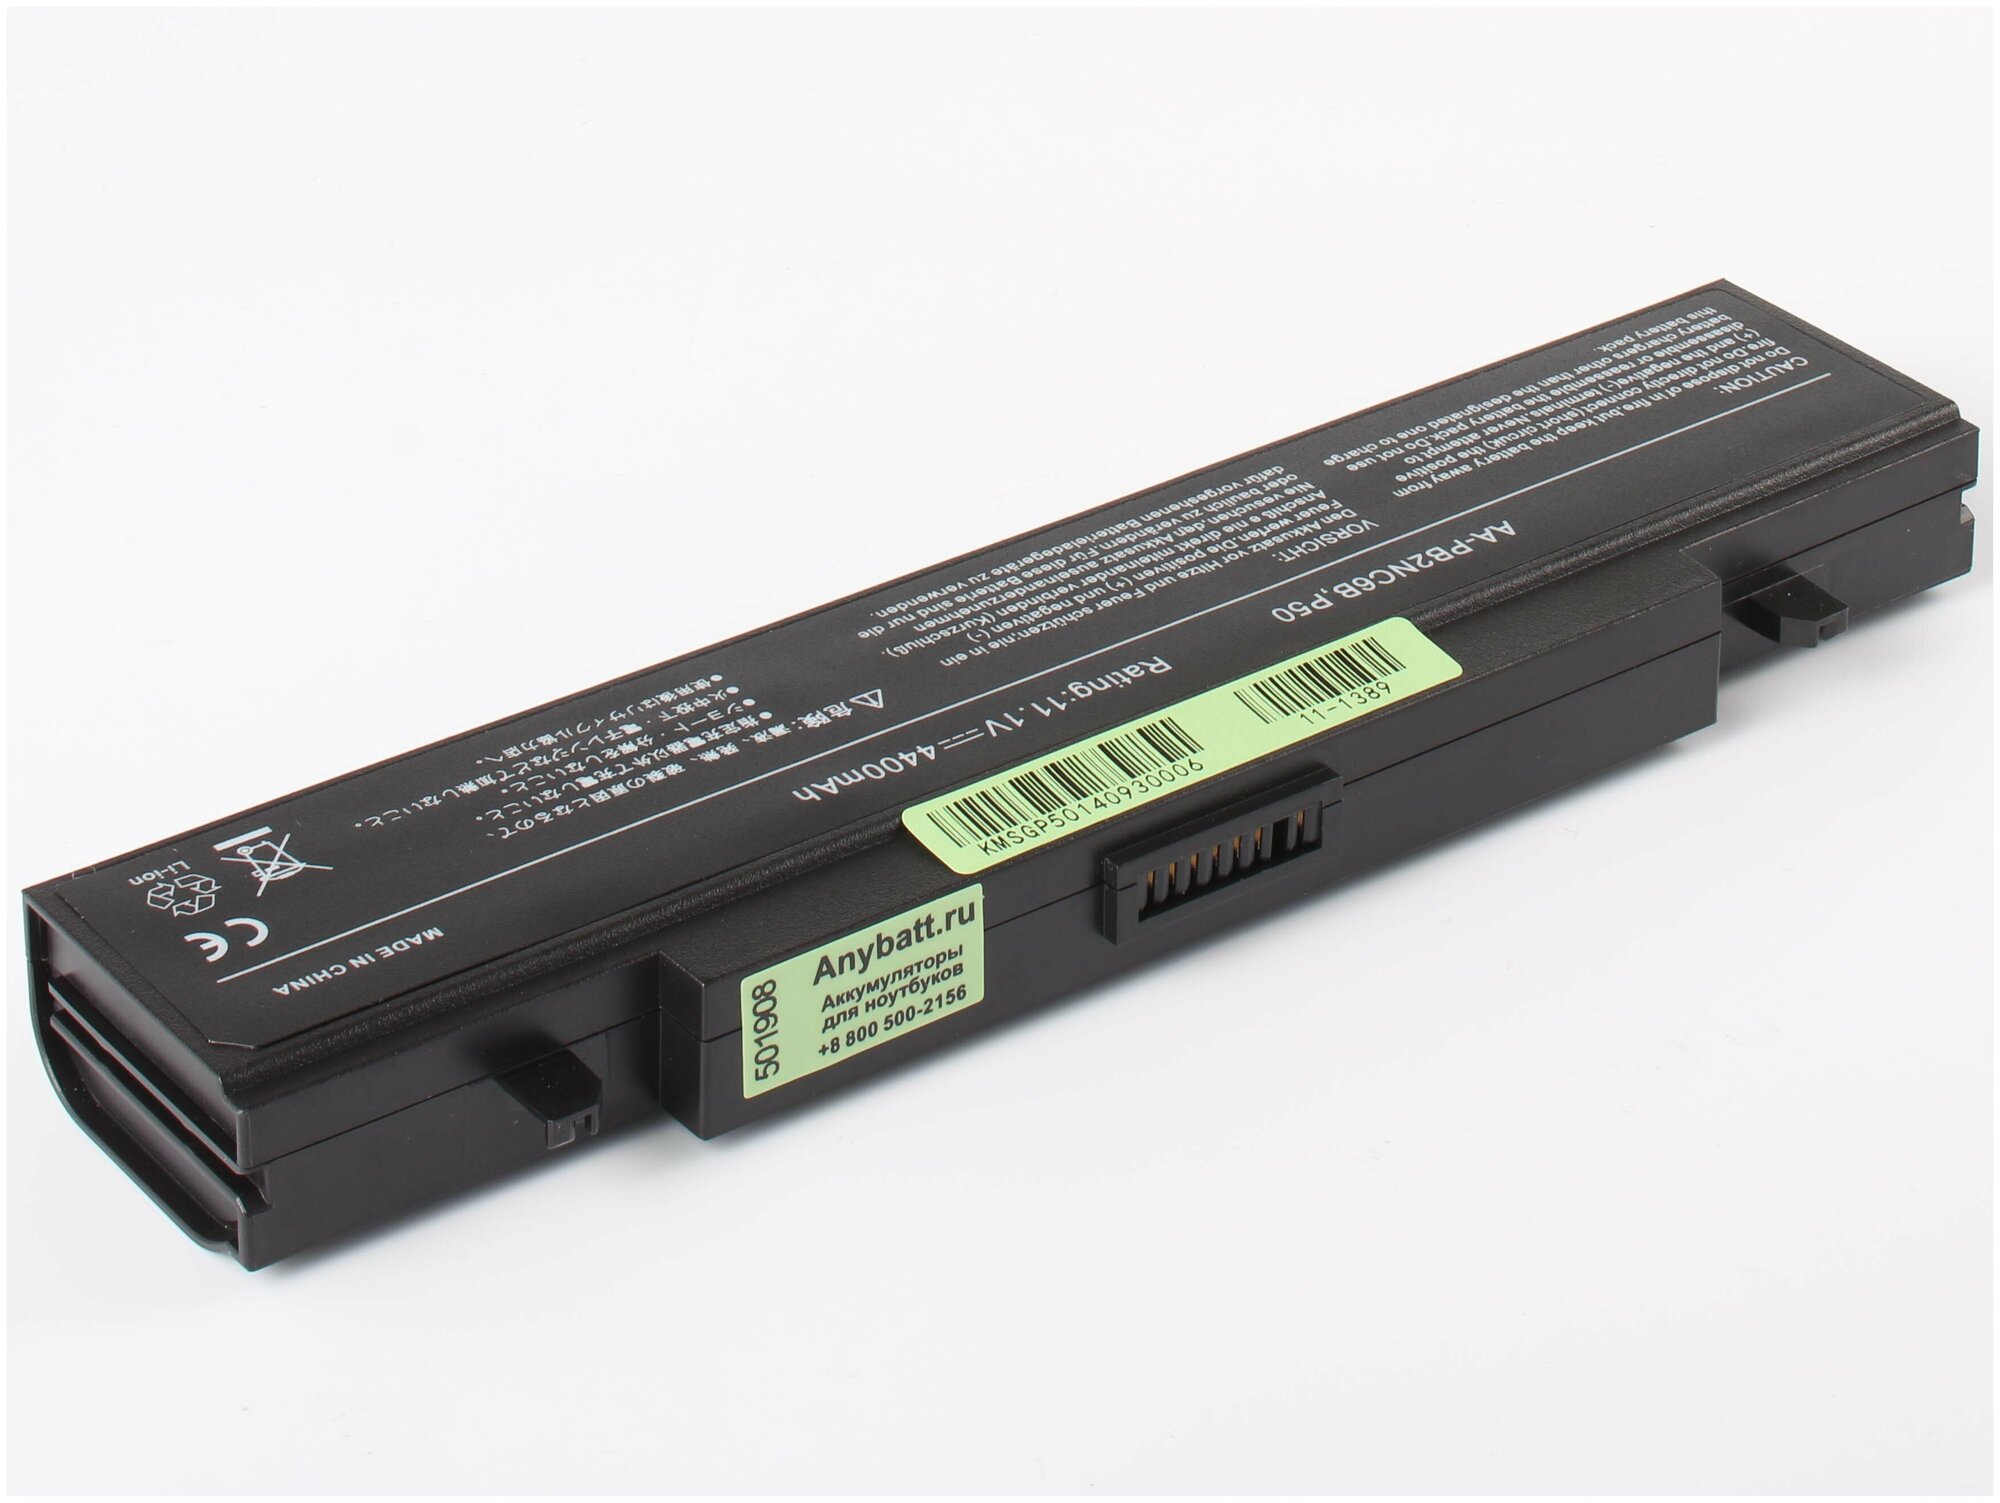 Аккумуляторная батарея Anybatt 11-U1-1389 4400mAh для Samsung R40 R60 R70 R700 R45 R560 R60 Plus R65 R460 R610 R58 Q310 X460 R505 P560 Q210 R508 NP-R40 NP-R510 R503 R509 NP-R60 NP-R700 NP-R70 R455 R560-BS02RU NP-R710